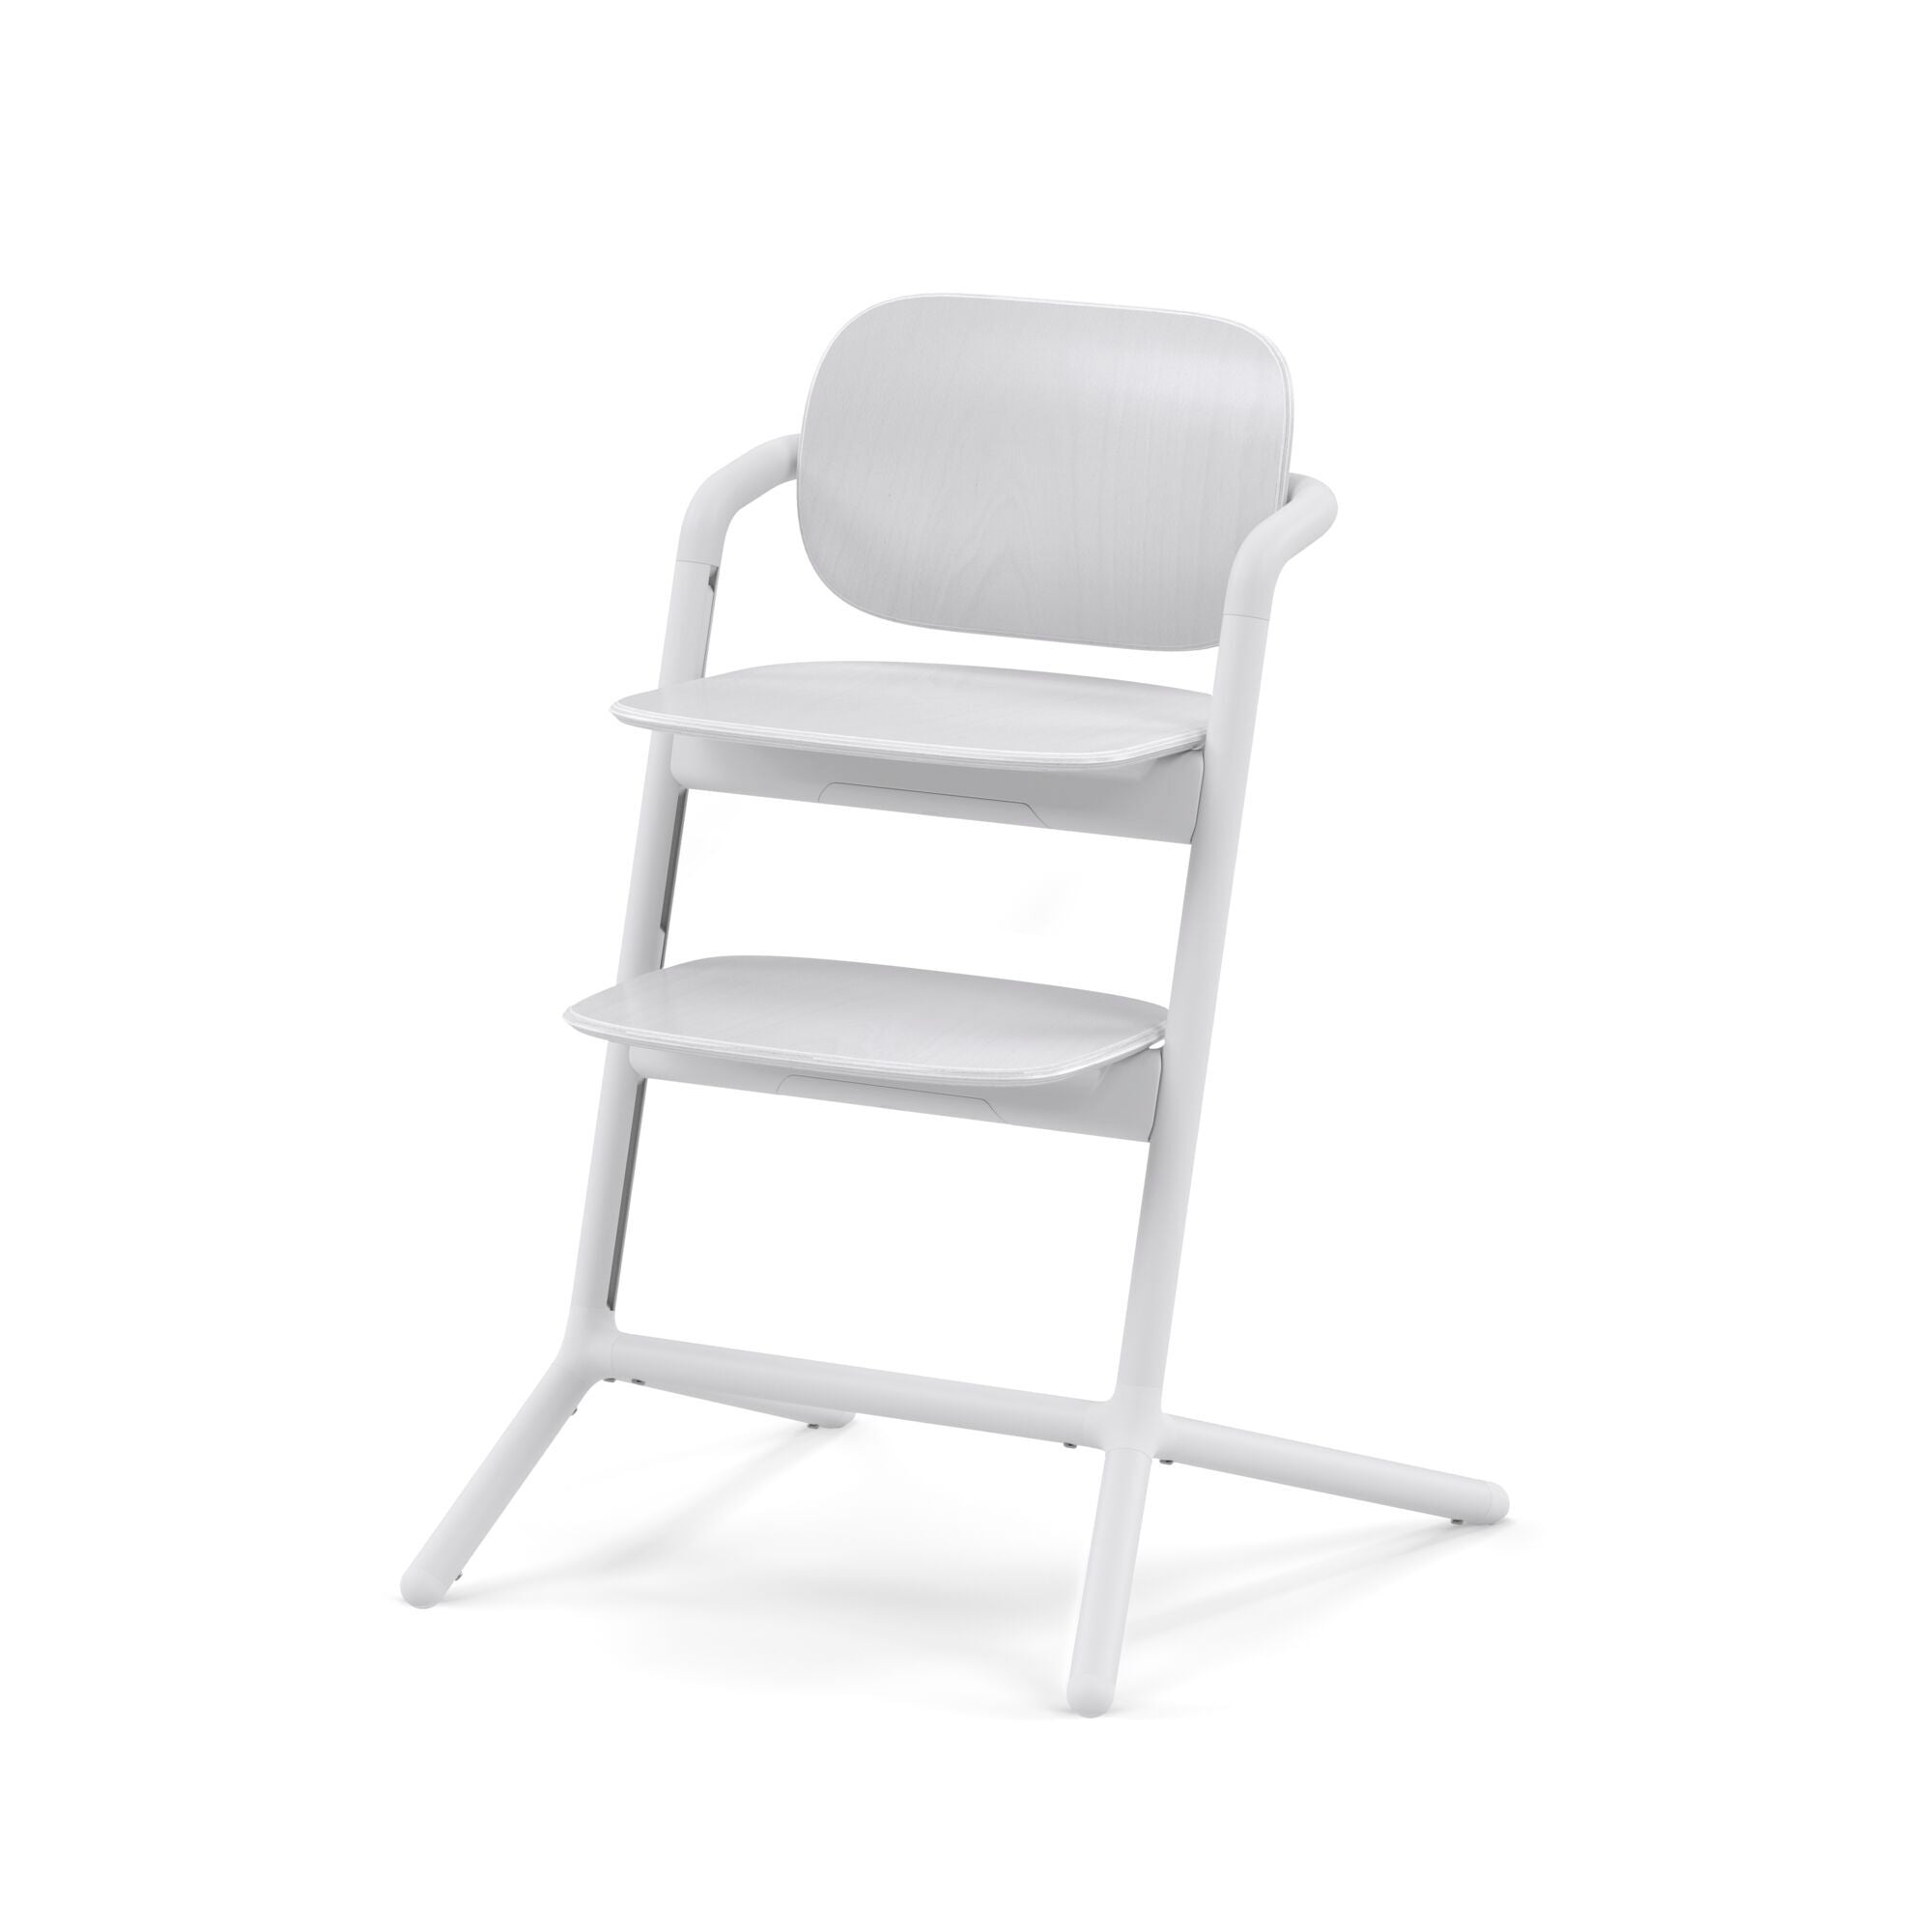 Cybex Lemo 2 High Chair 4-in-1 - ANB Baby -40638462882434 in 1 high chair